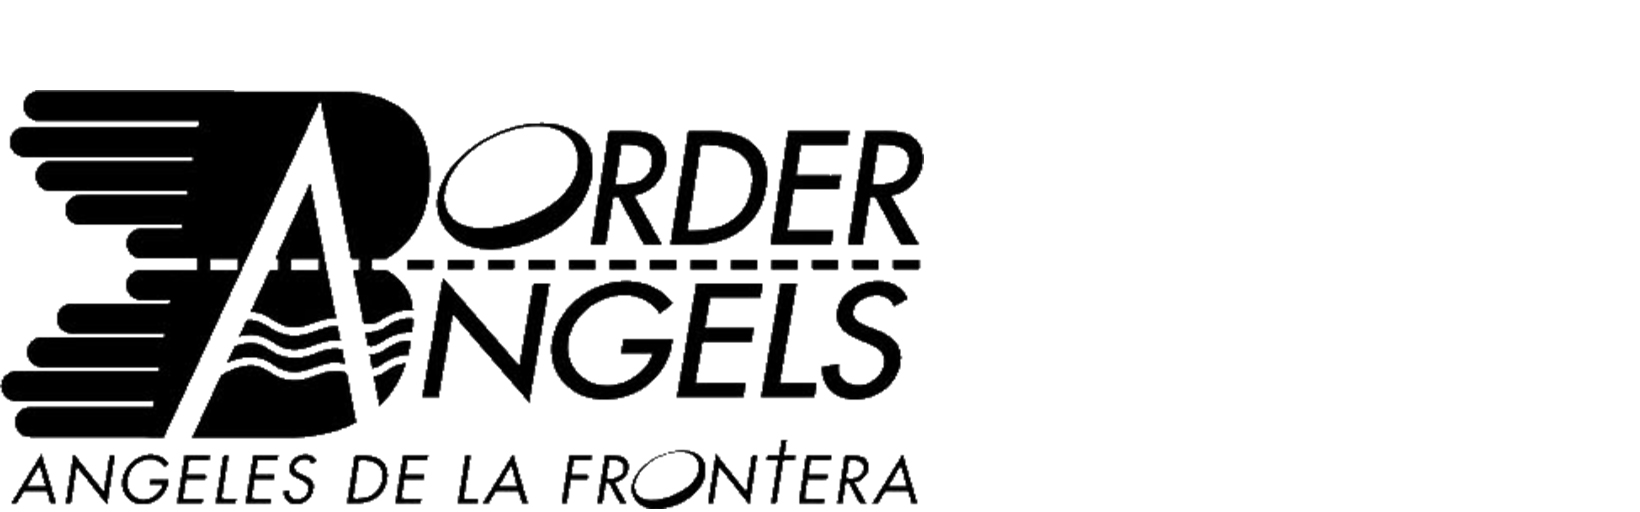 Border Angels